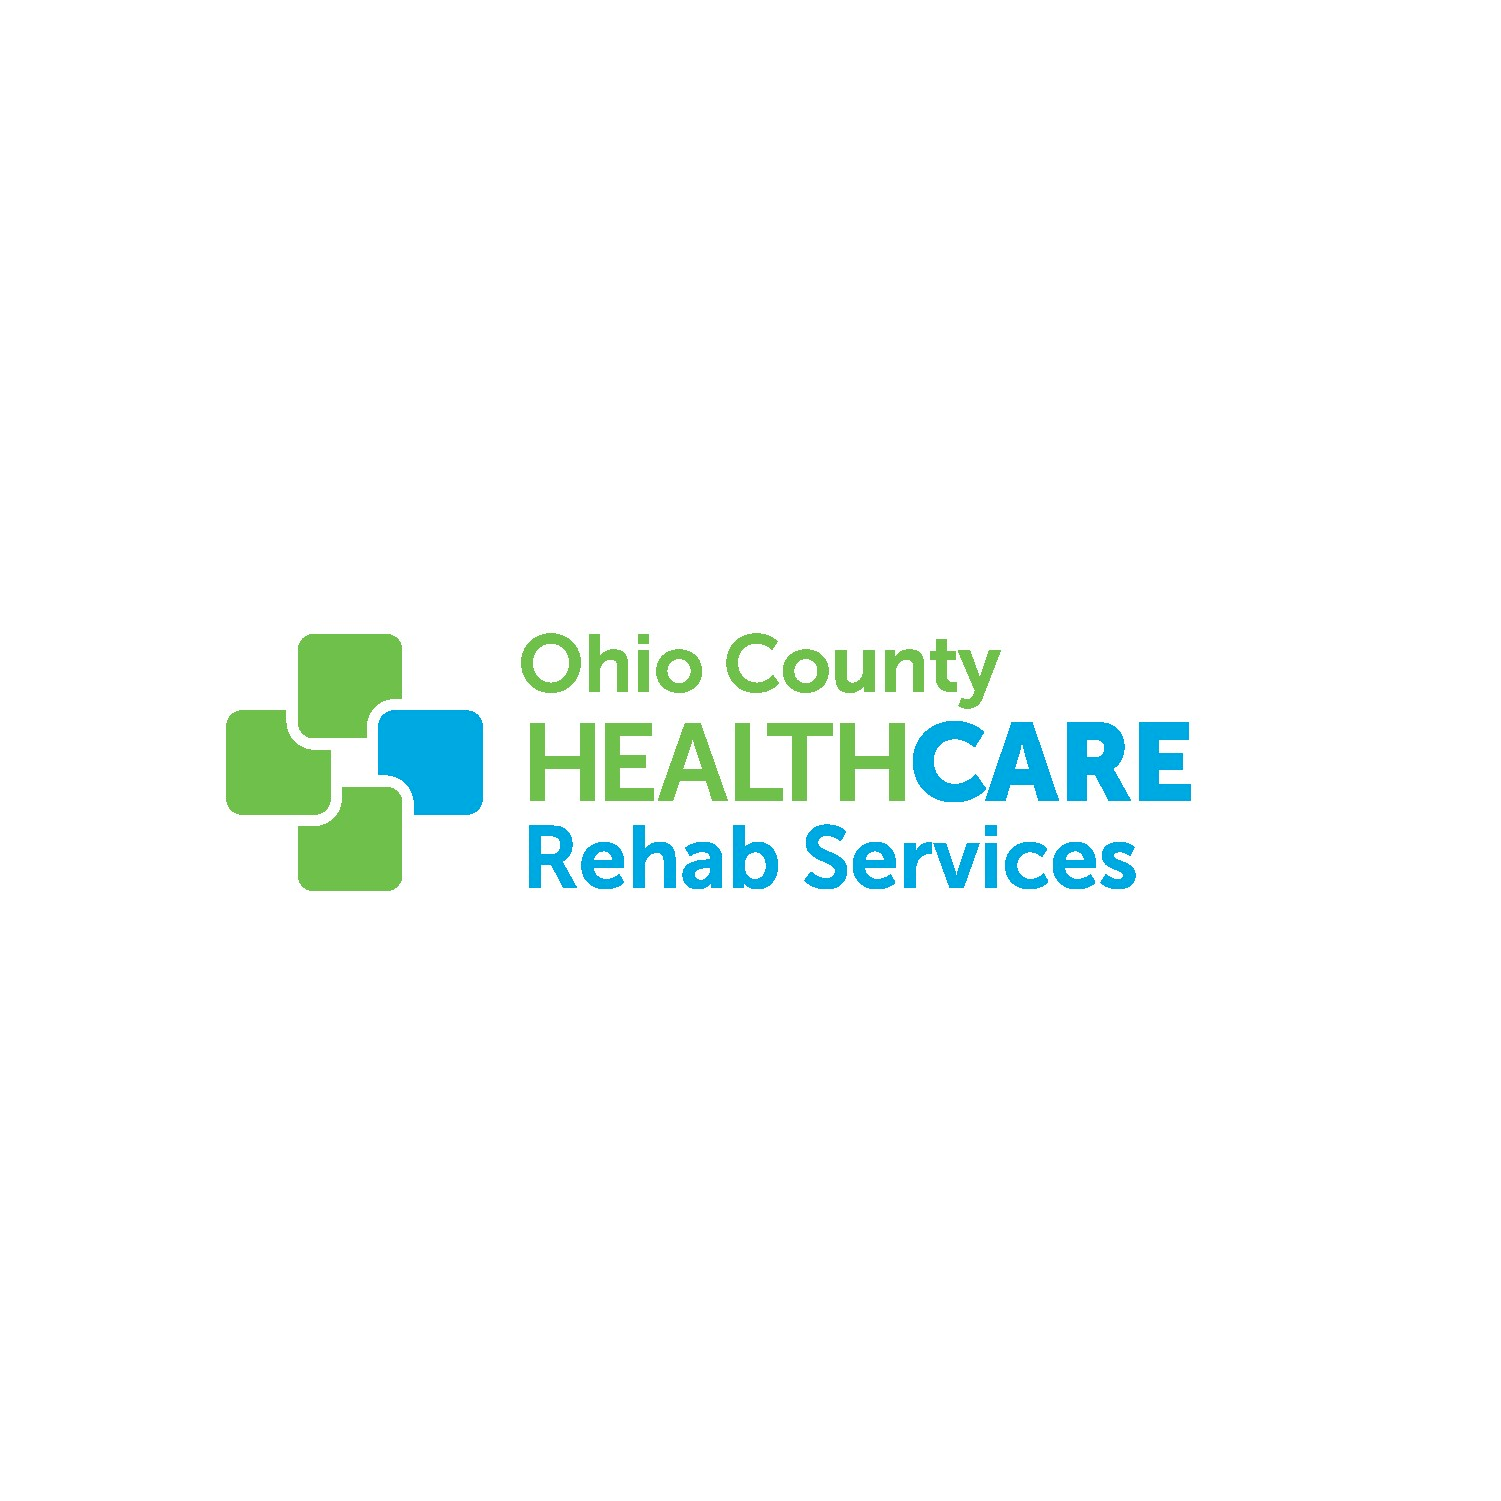 Ohio County Healthcare Rehabilitation Services